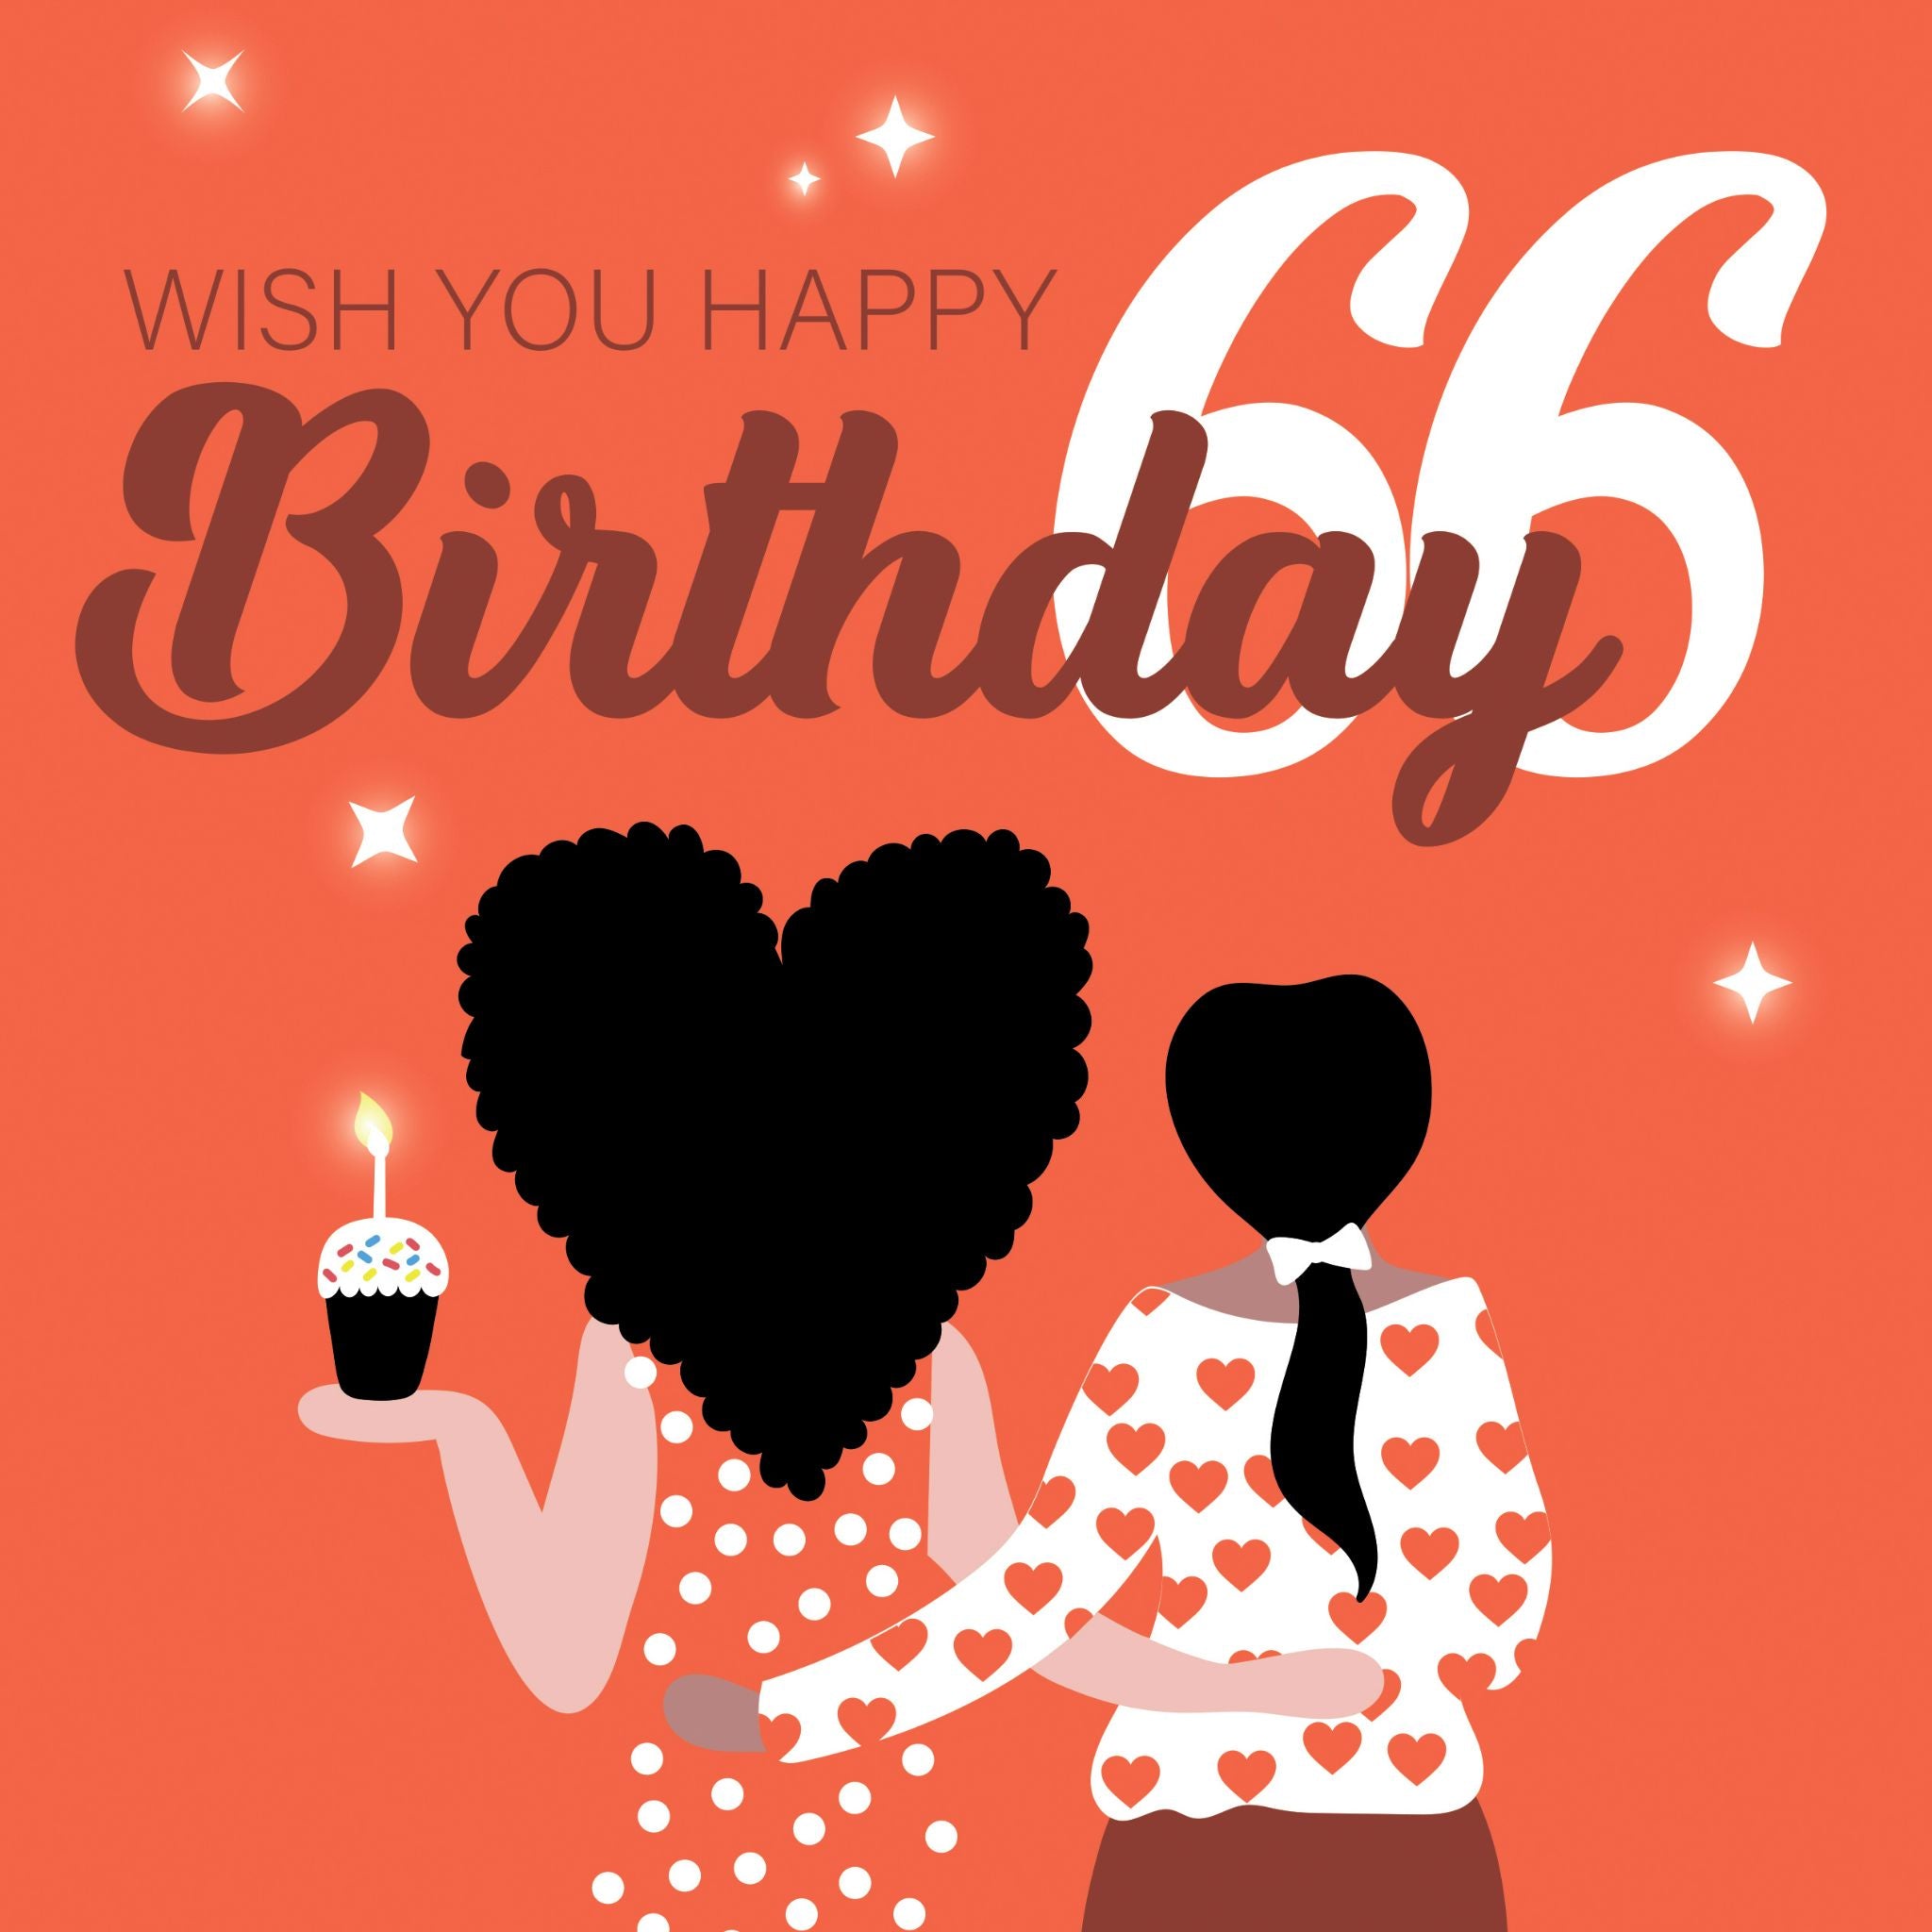 66th birthday wishes